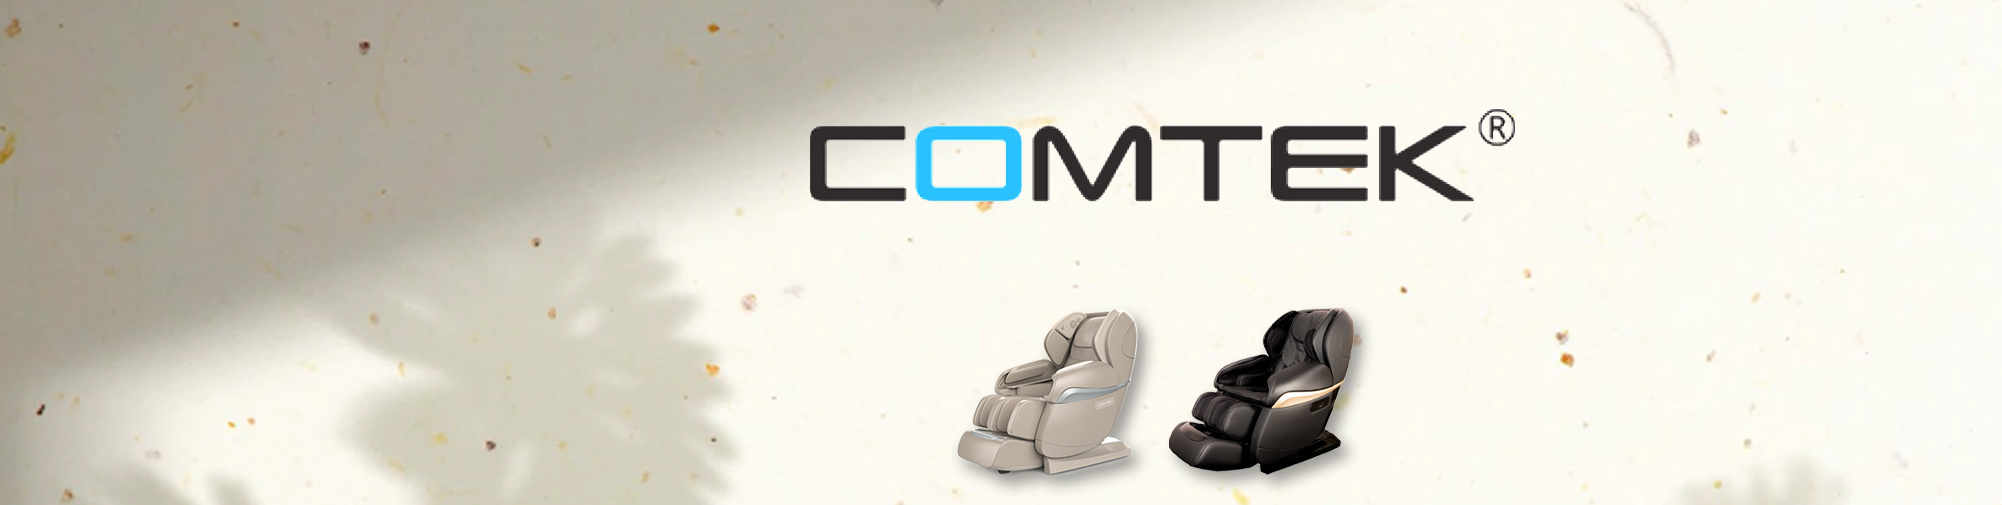 COMTEK - Producător profesionist original | Massage Chair World